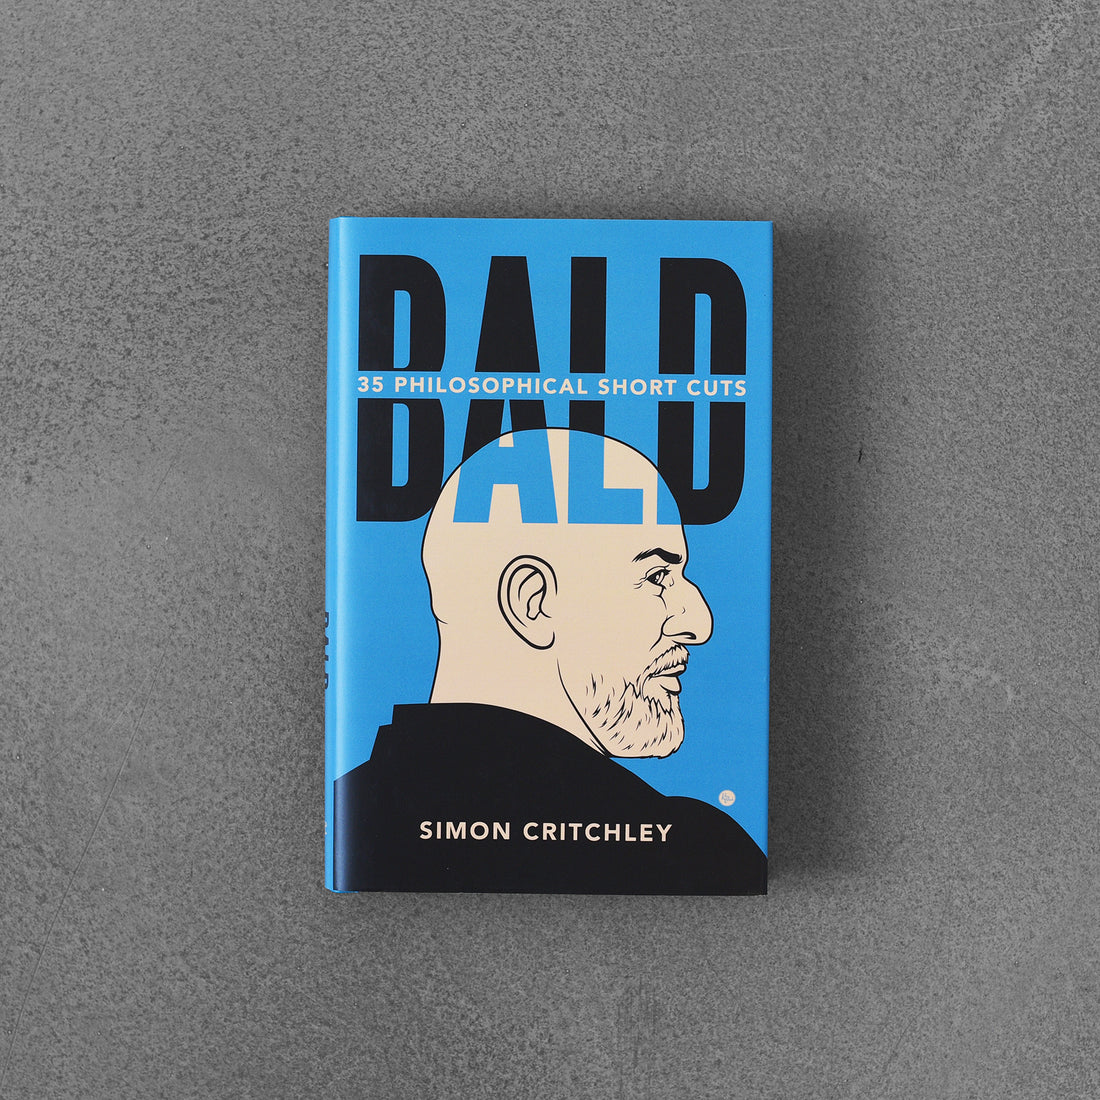 Bald: 35 Philosophical Short Cuts, Simon Critchley